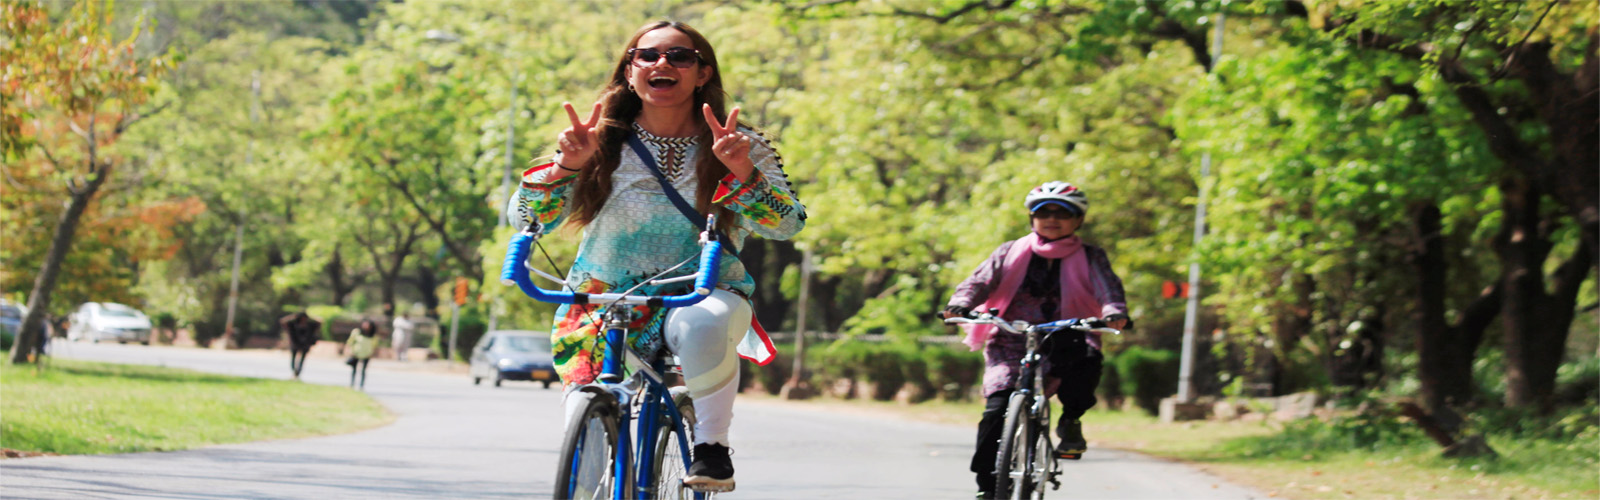 Pakistani female biker: ‘I loved feeling of freedom with breeze in my hair’